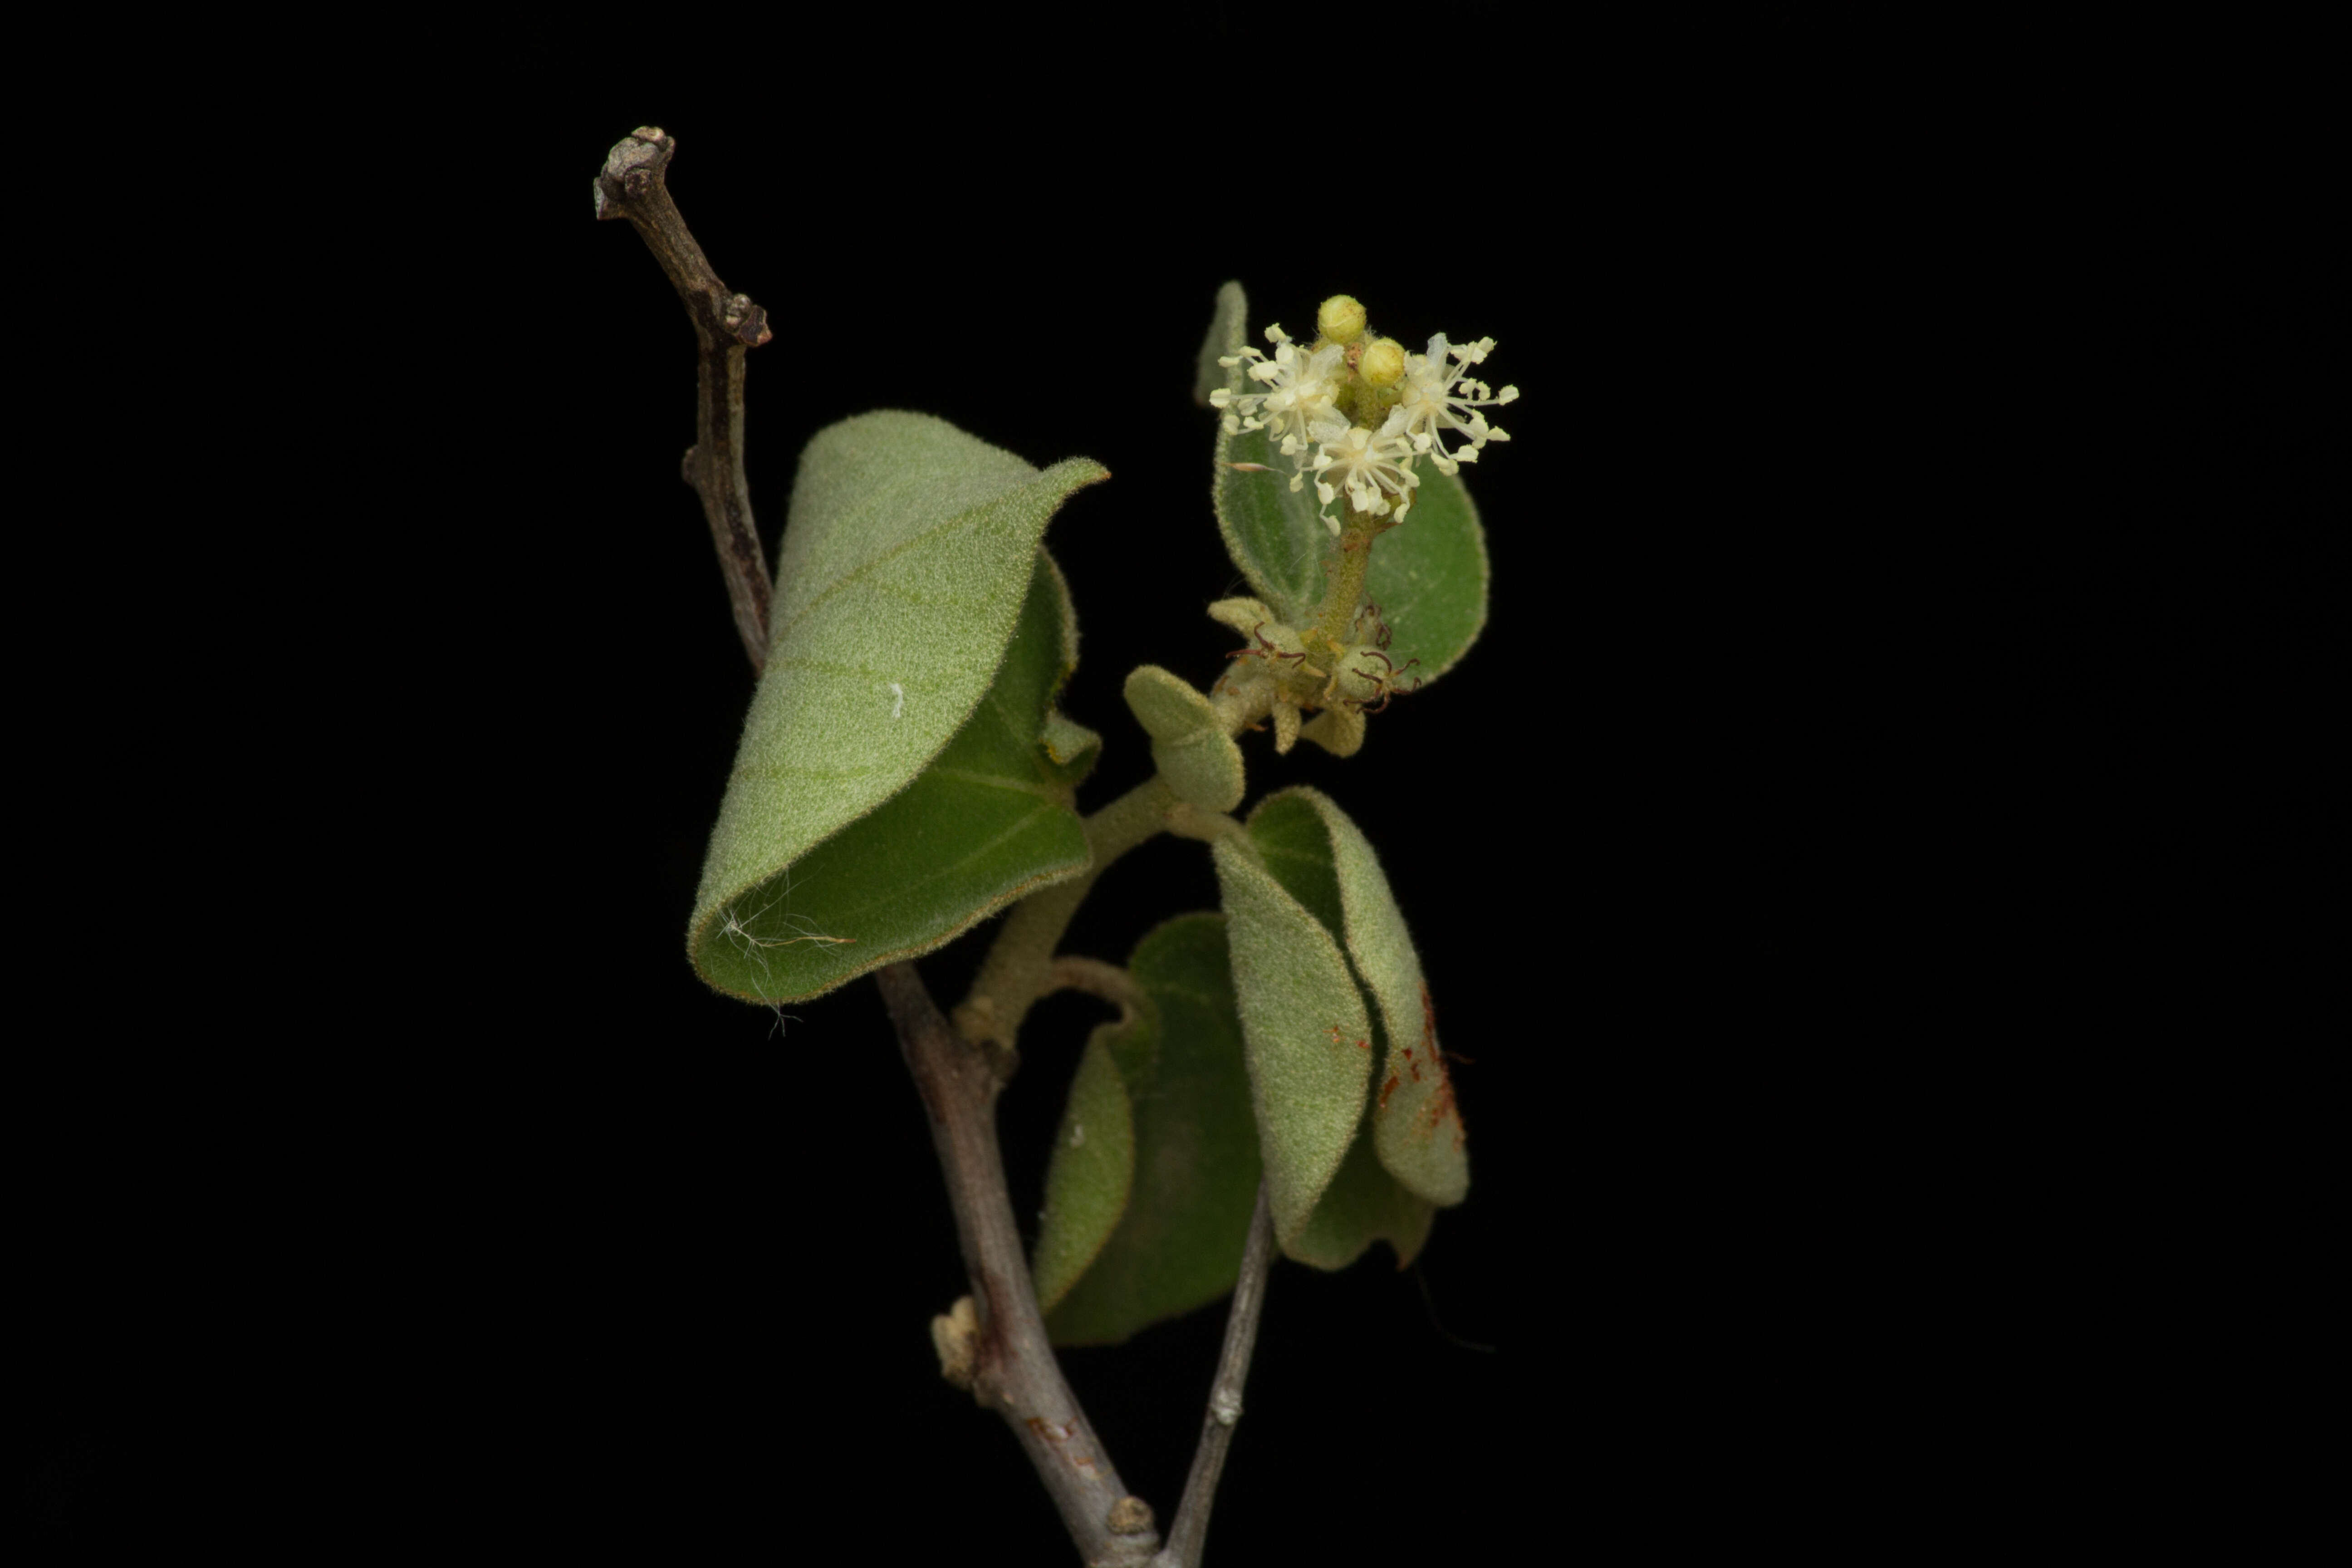 Image of Croton mazapensis Lundell